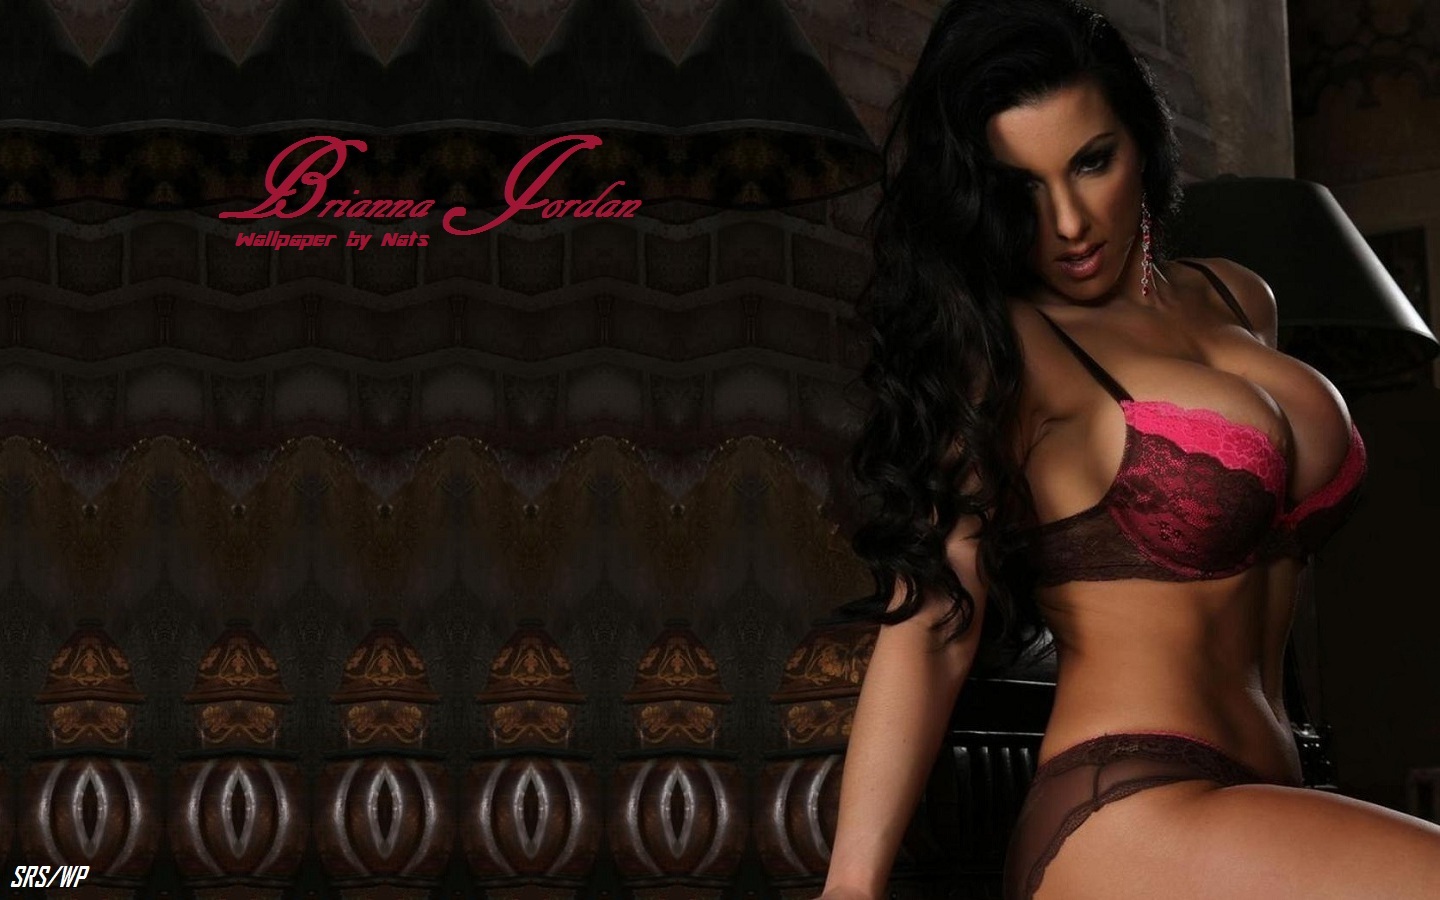 Download High quality Brianna Jordan wallpaper / Celebrities Female / 1440x900